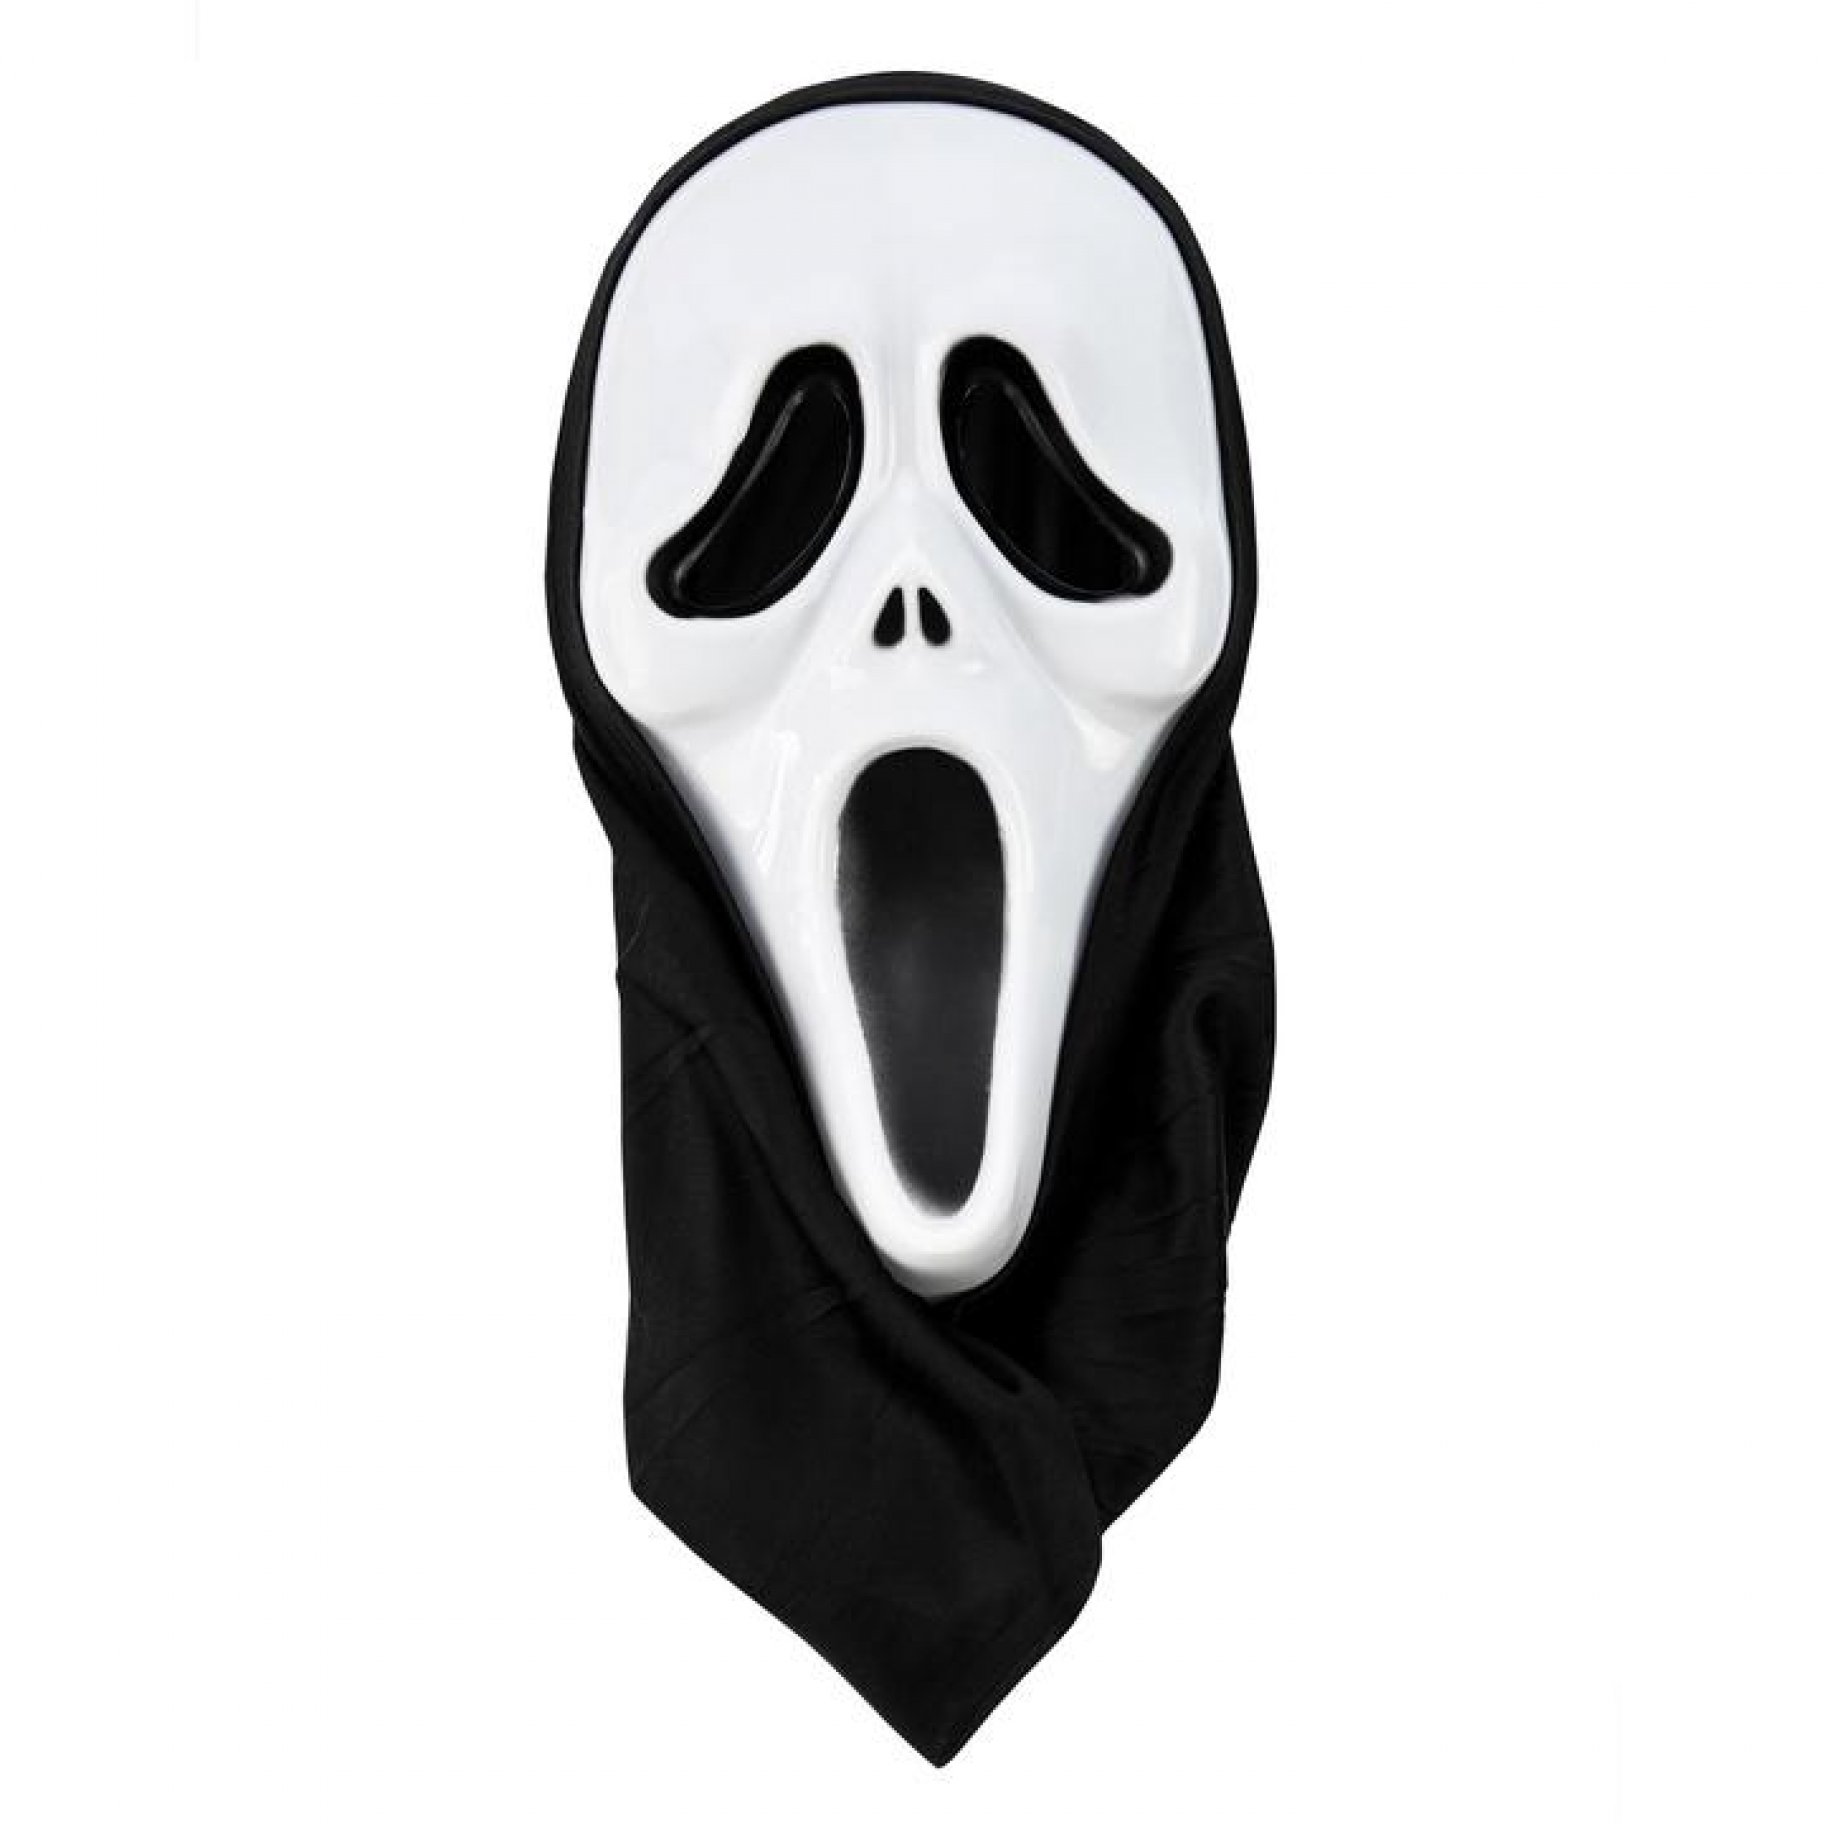 Halloweeni mask "Scream"